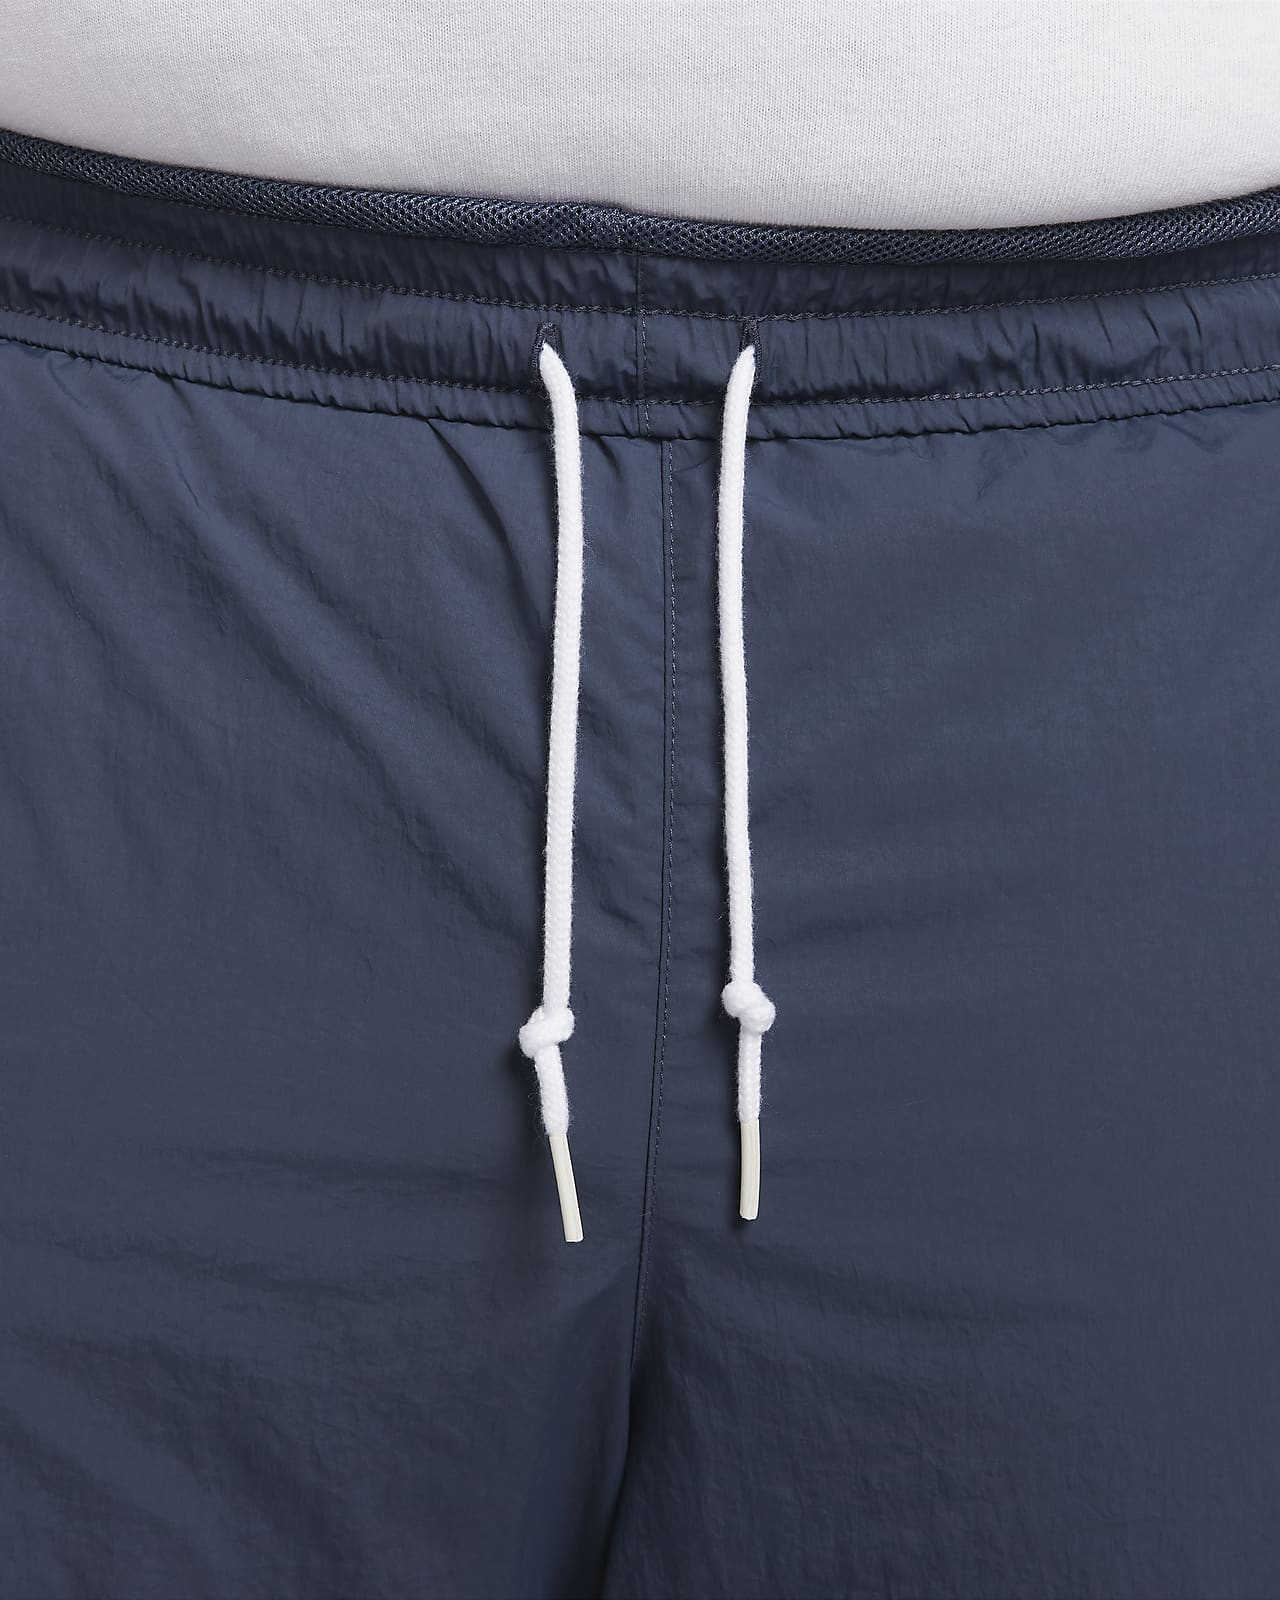 Men's Nike Brand Logo Embroidered Solid Color Cotton Sports Pants/Trou -  KICKS CREW